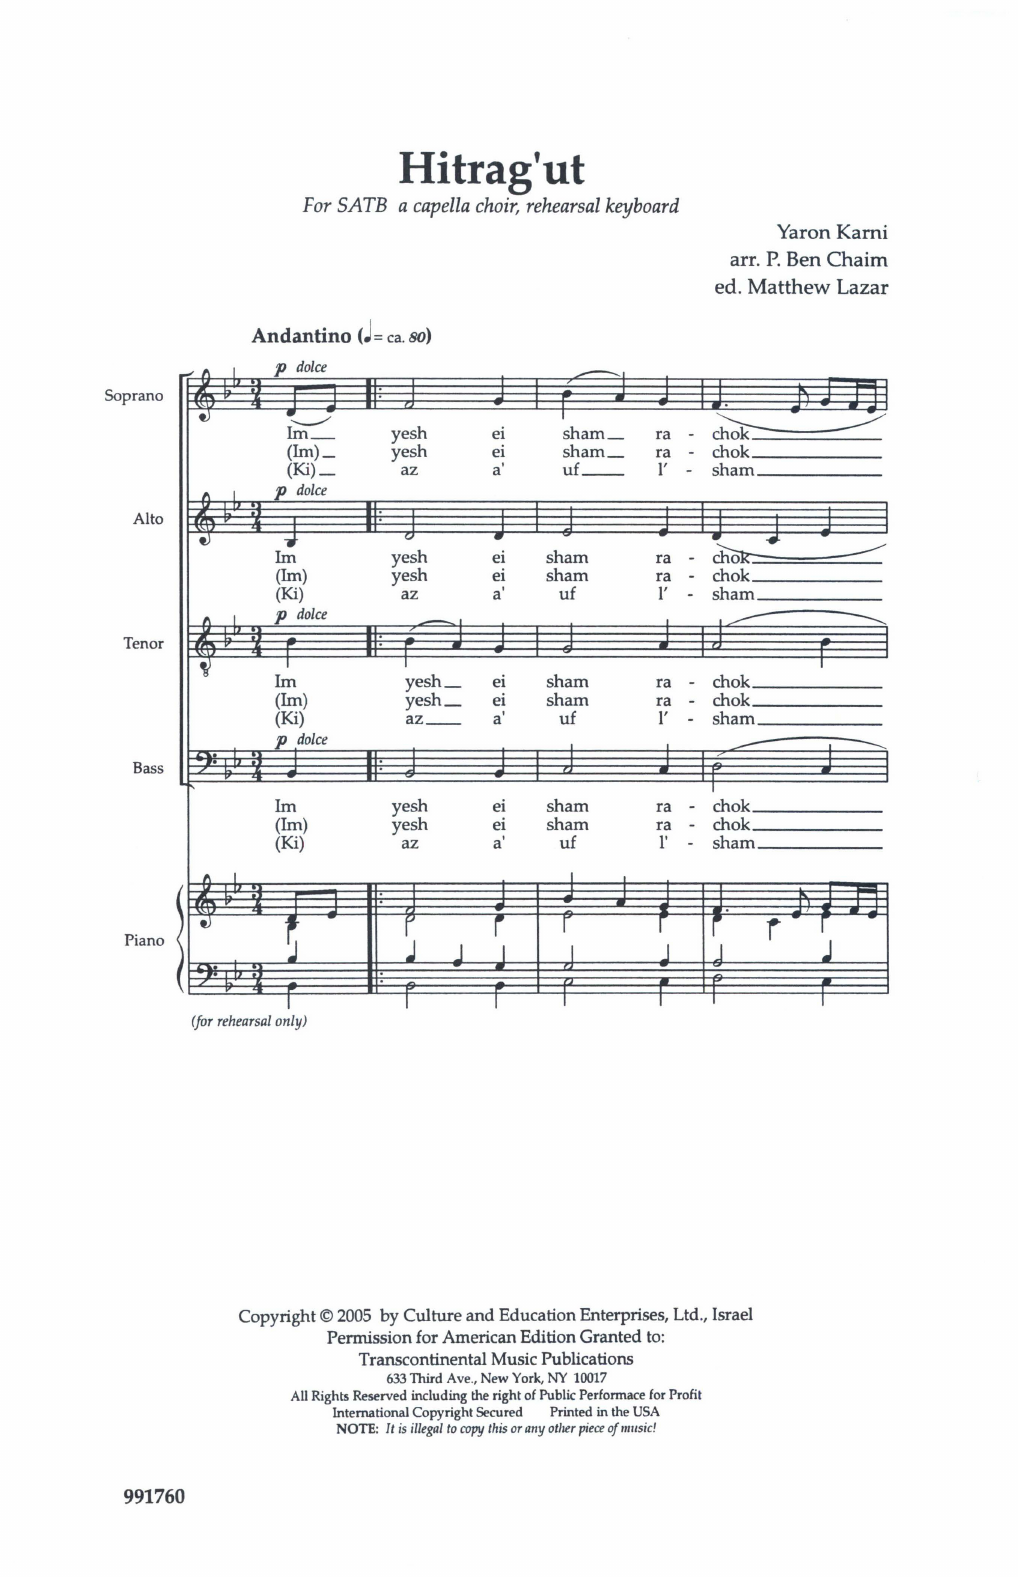 Matthew Lazar Hitrag'ut (Tranquility) (arr. Paul Ben-Haim) Sheet Music Notes & Chords for SATB Choir - Download or Print PDF